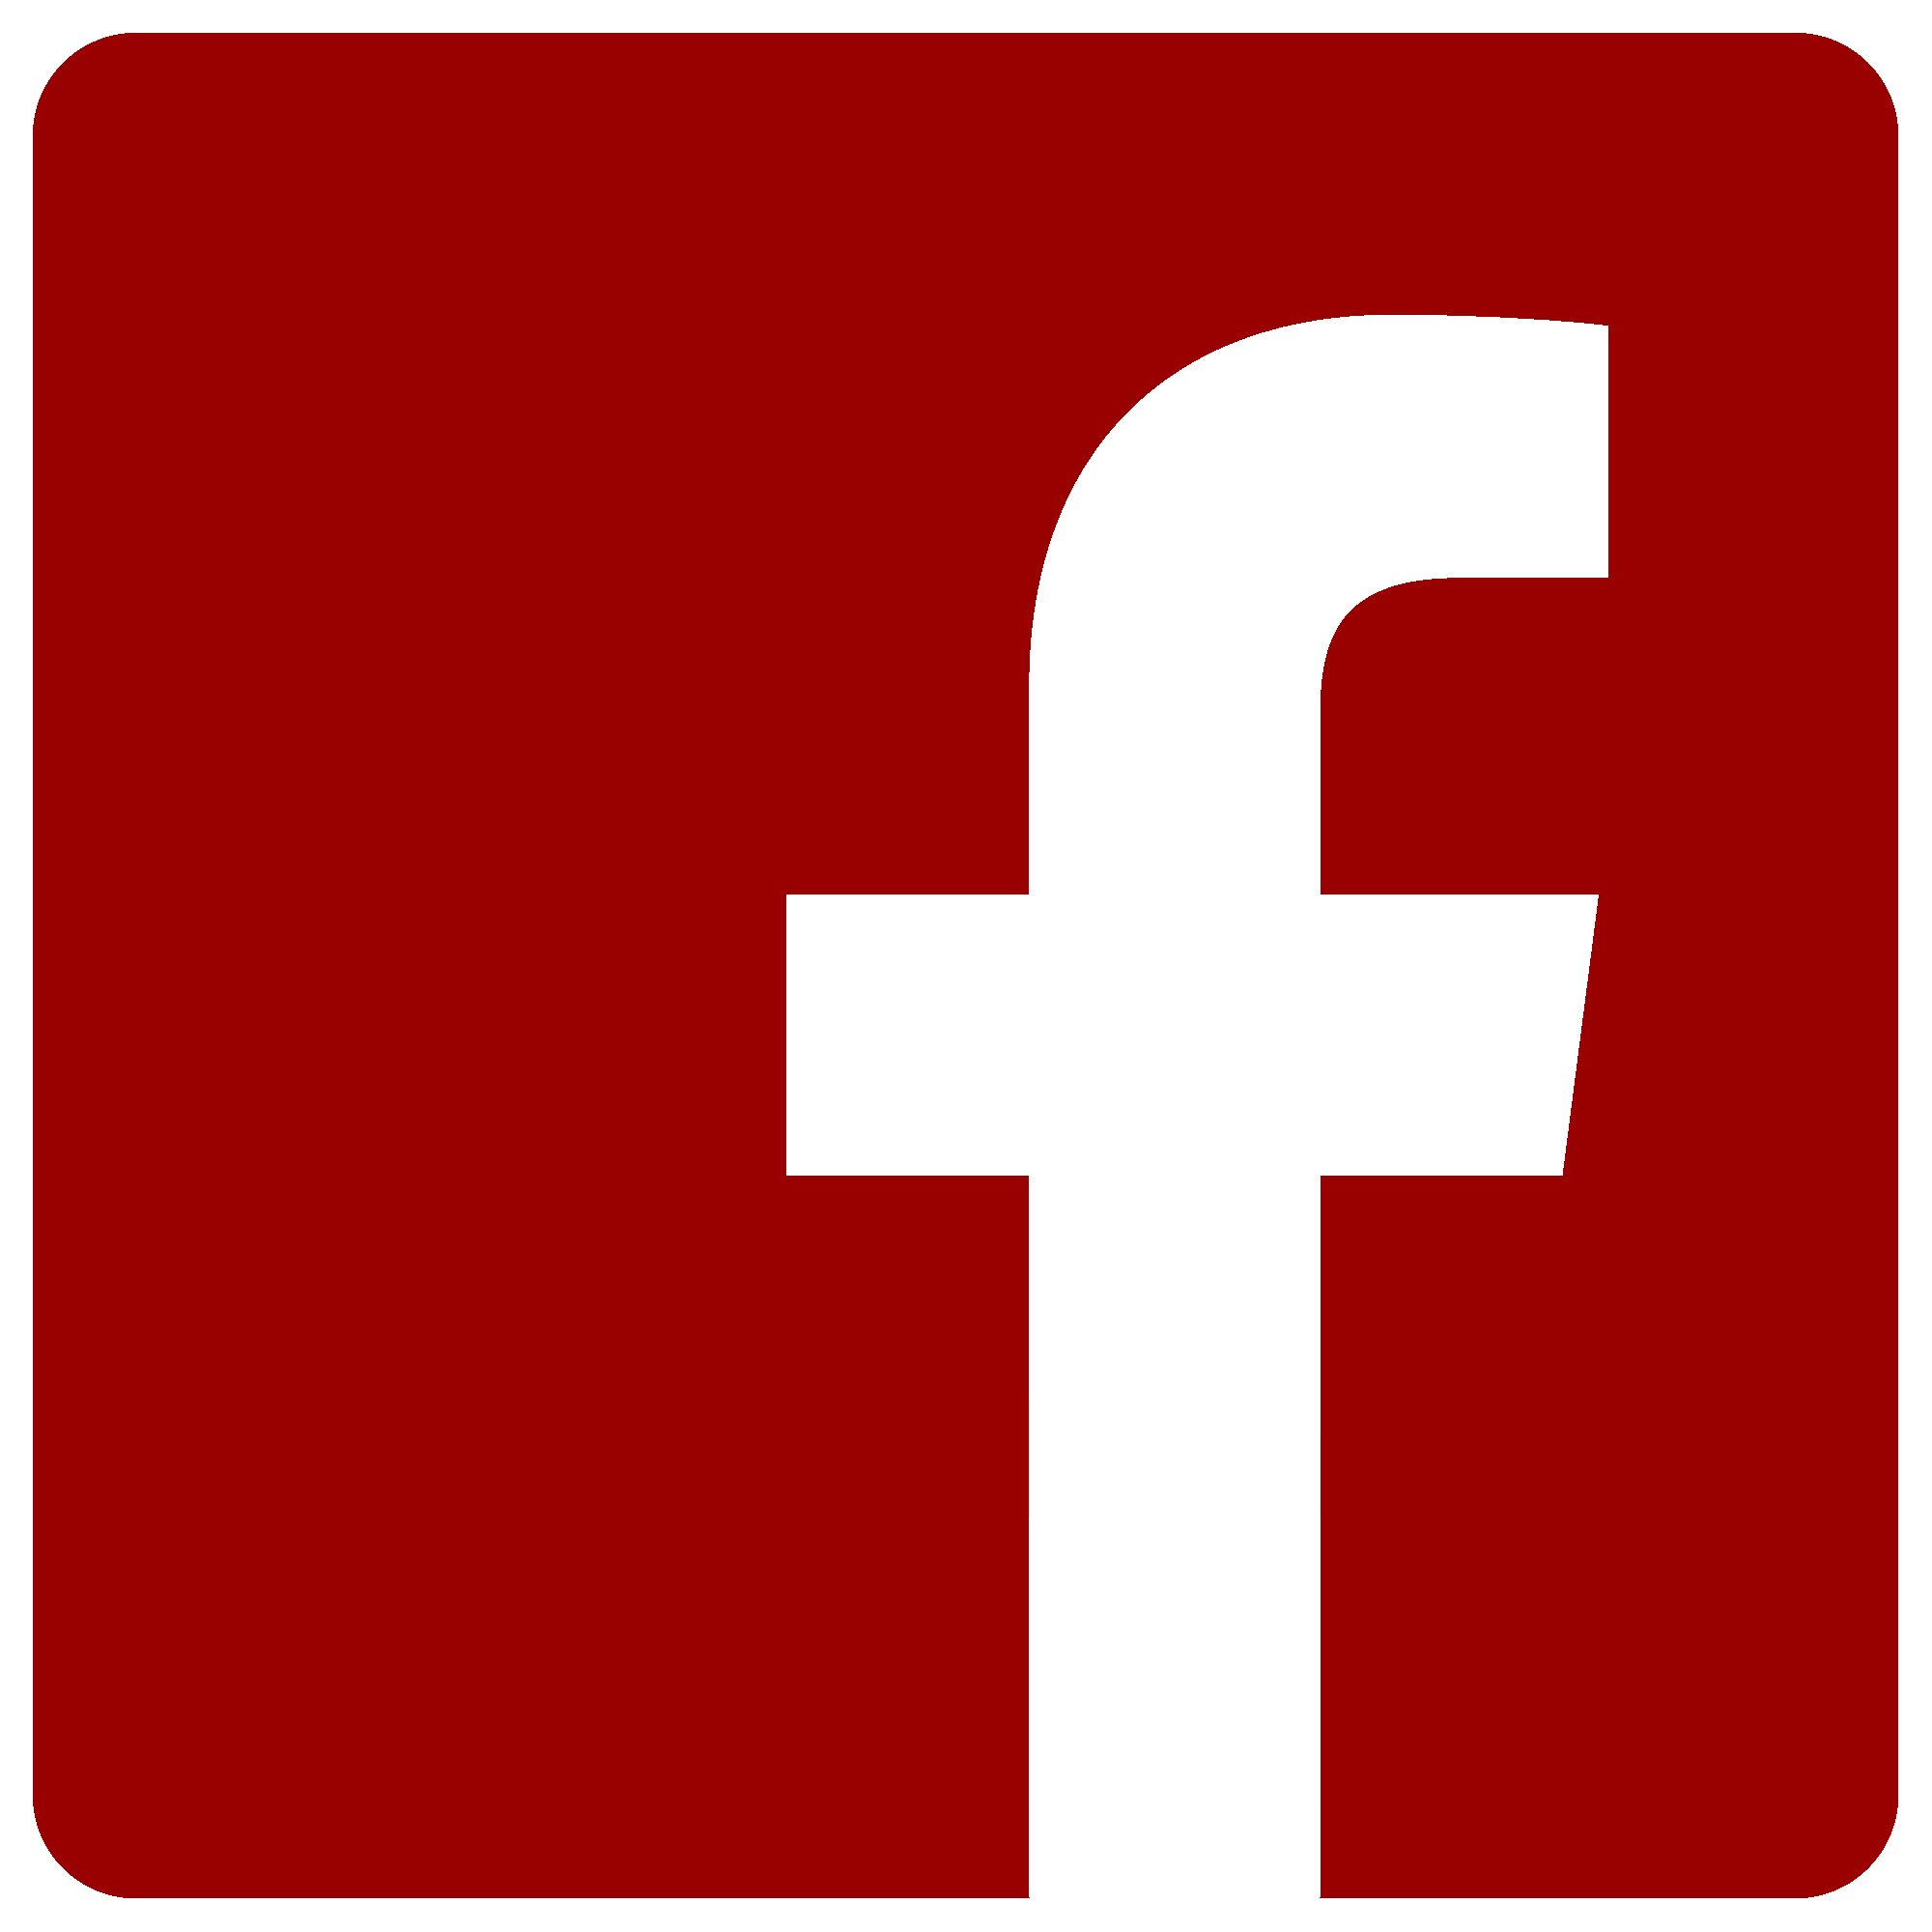 Original Facebook Logo - Facebook Logo Red.png